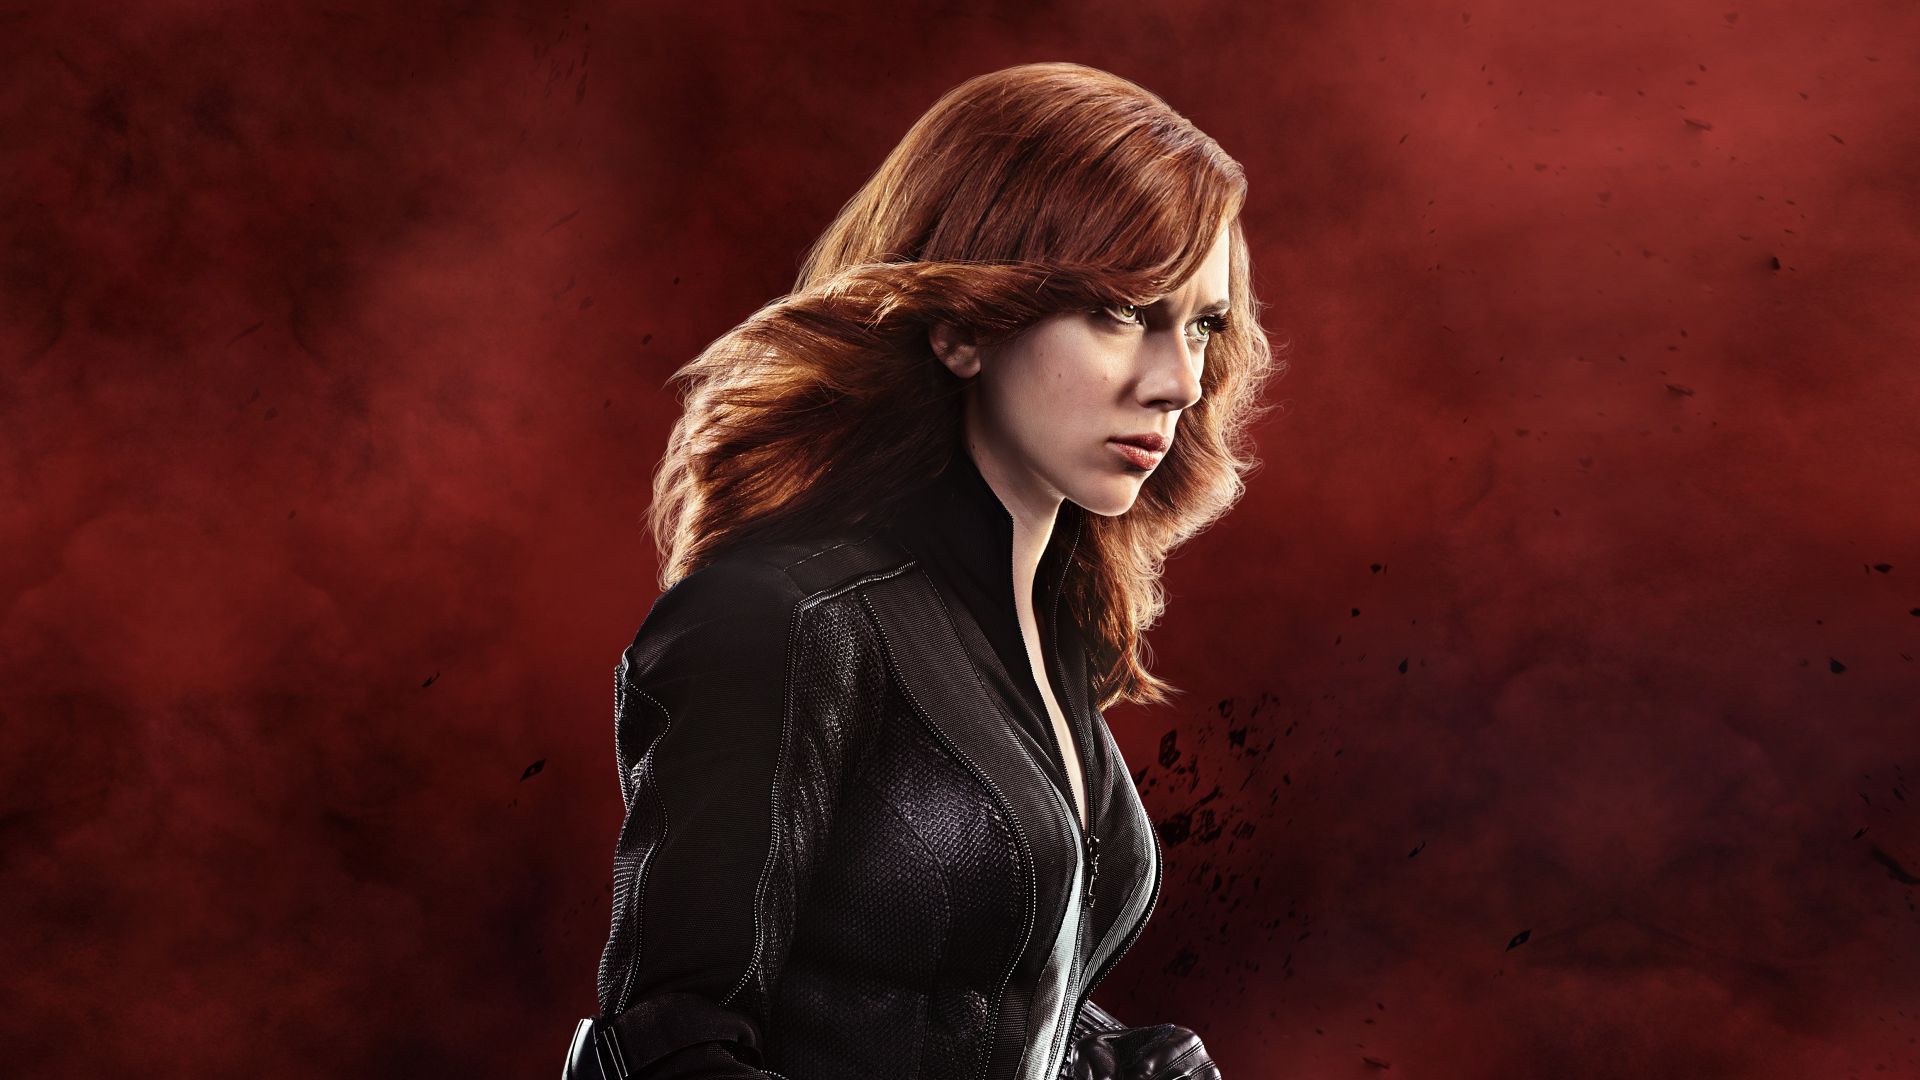 BLACK WIDOW, Scarlett Johansson, Captain America 3: civil war, Marvel, best movies of 2016 (horizontal)